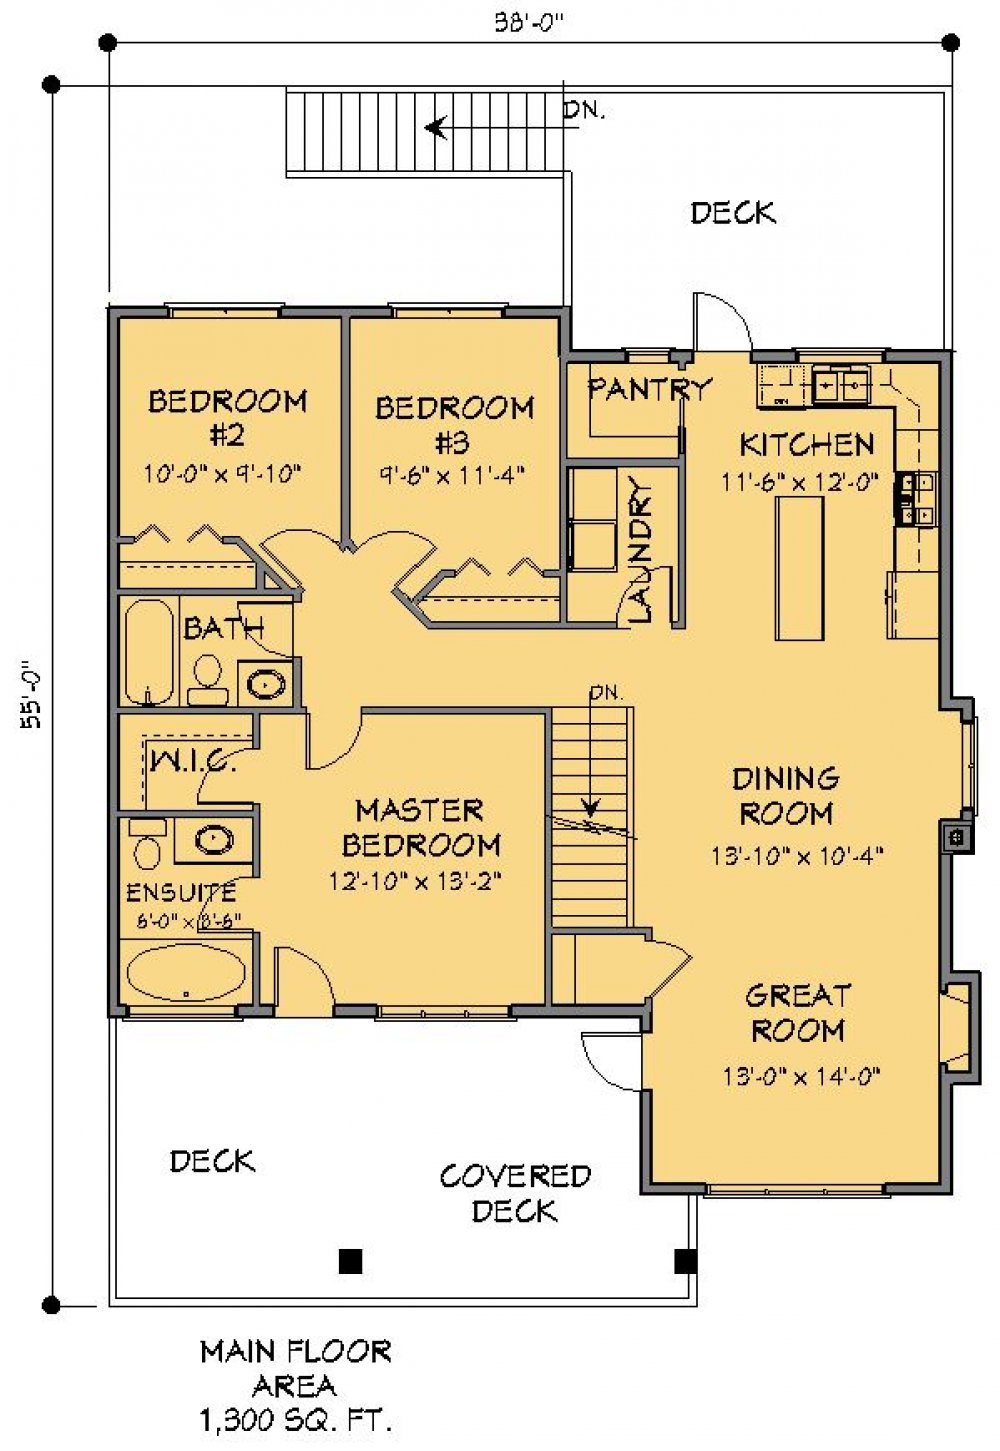 House Plan E1110-11 Main Floor Plan